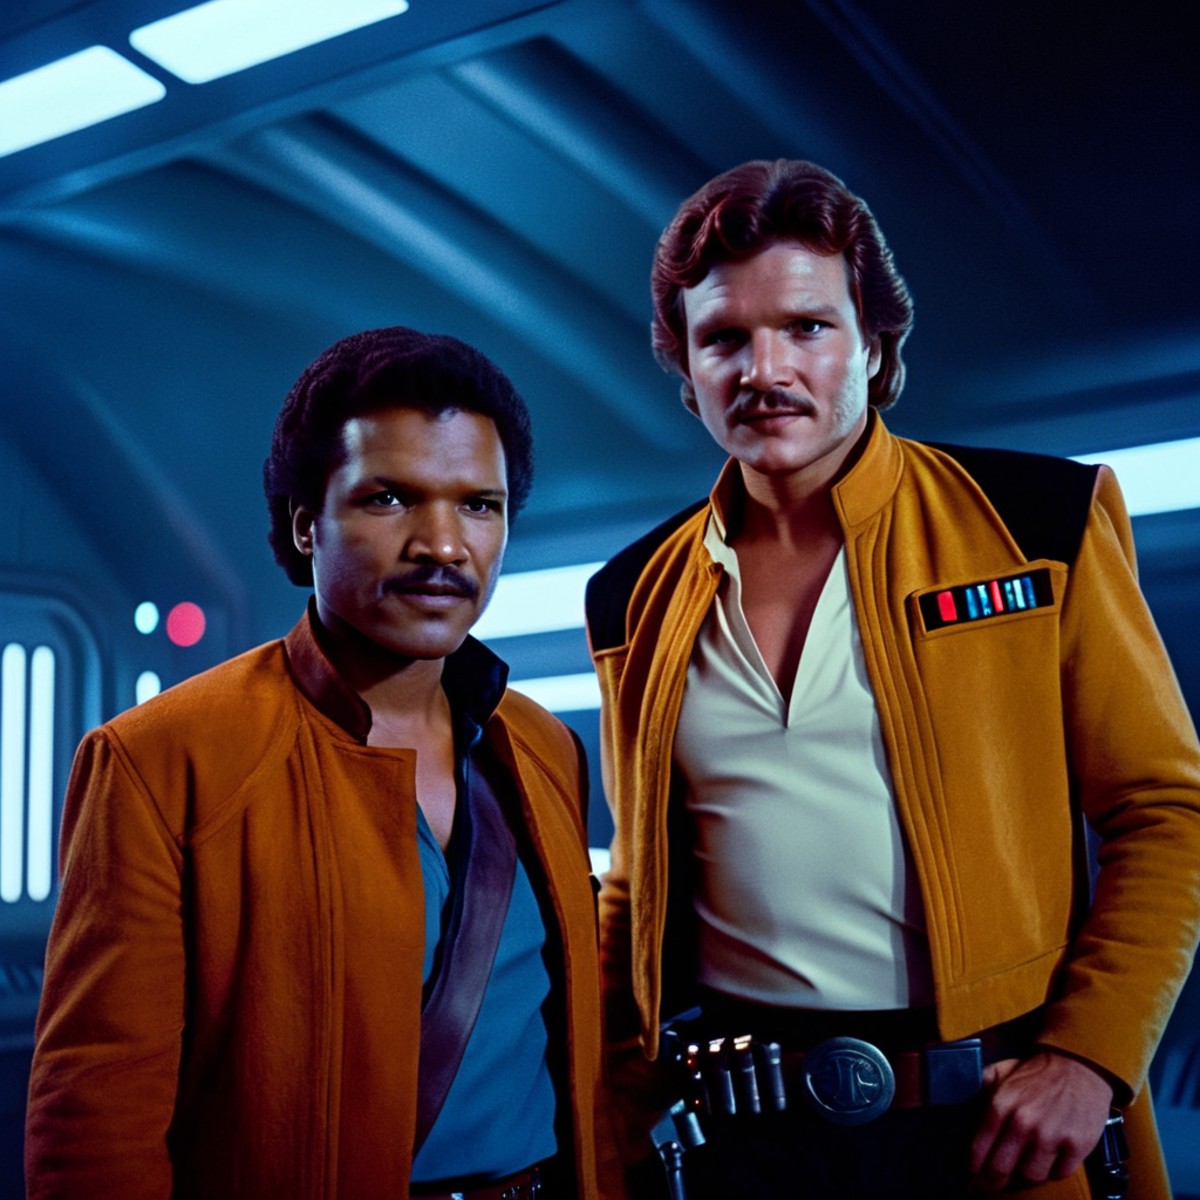 cinematic film still of  <lora:Lando Calrissian:1.2>
Lando Calrissian a man standing next to Han Solo in star wars univers...